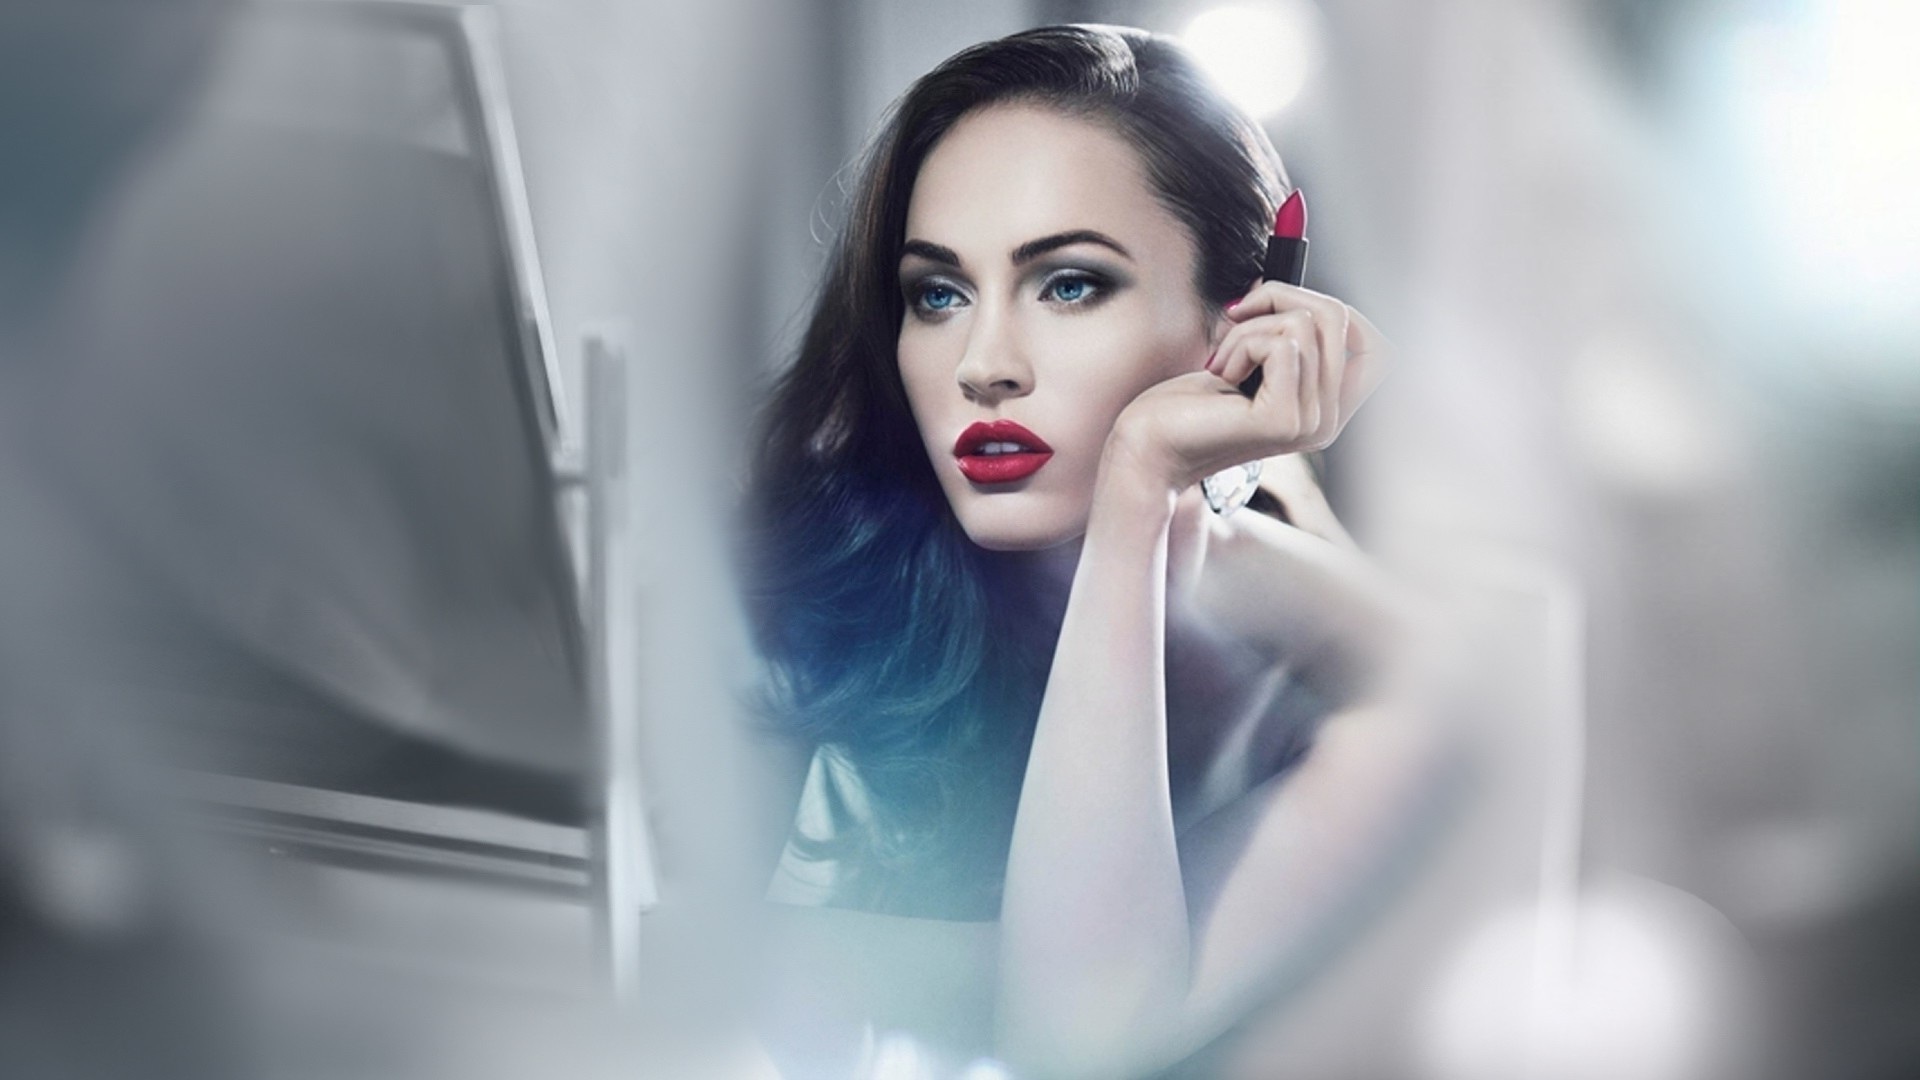 Megan Fox 720p Image Desktop Wallpaper